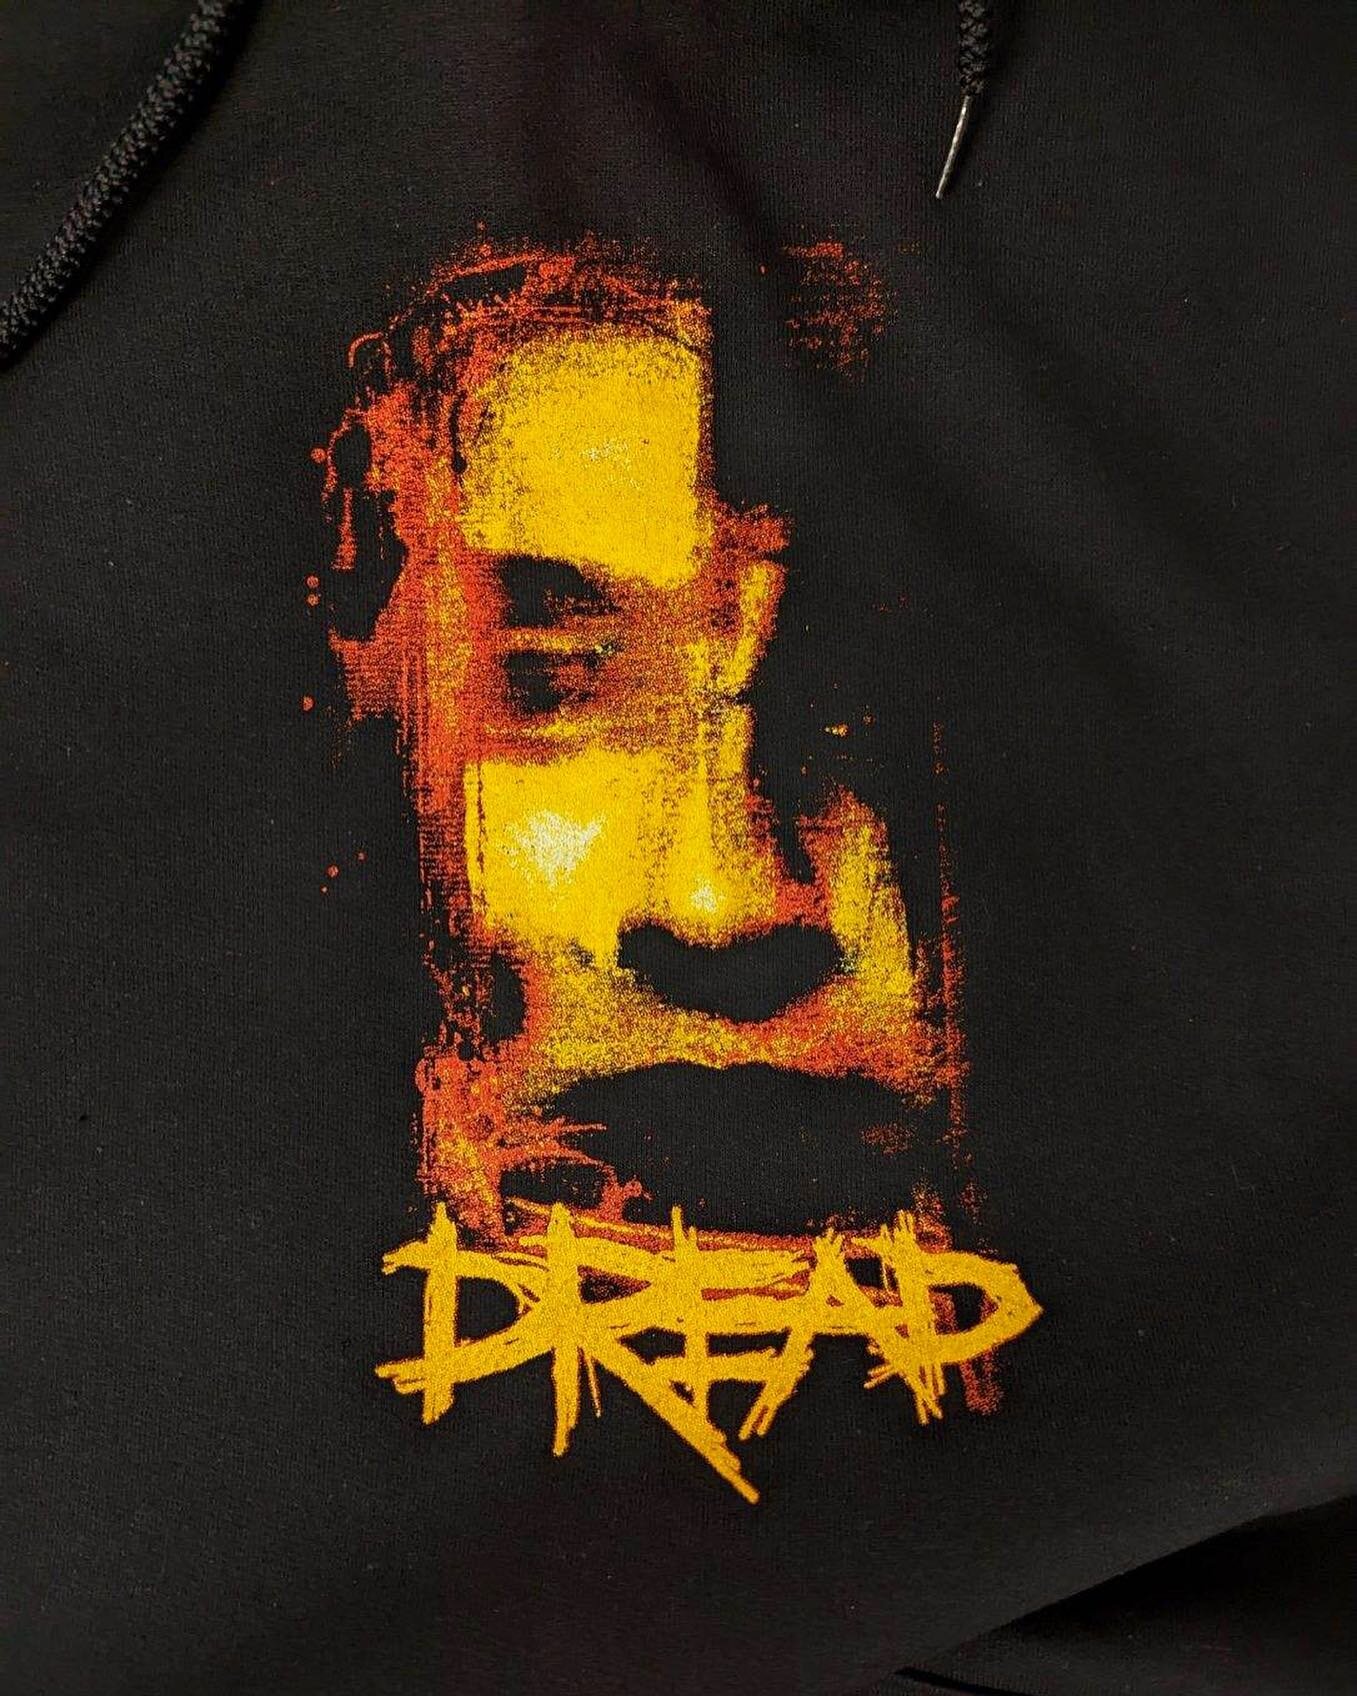 Super rad hoodie prints we did for the homies in @dread.mn
.
.
.
#screenprinting #merch #metal #dread #mn #twincities #p666rty #jensoncreative